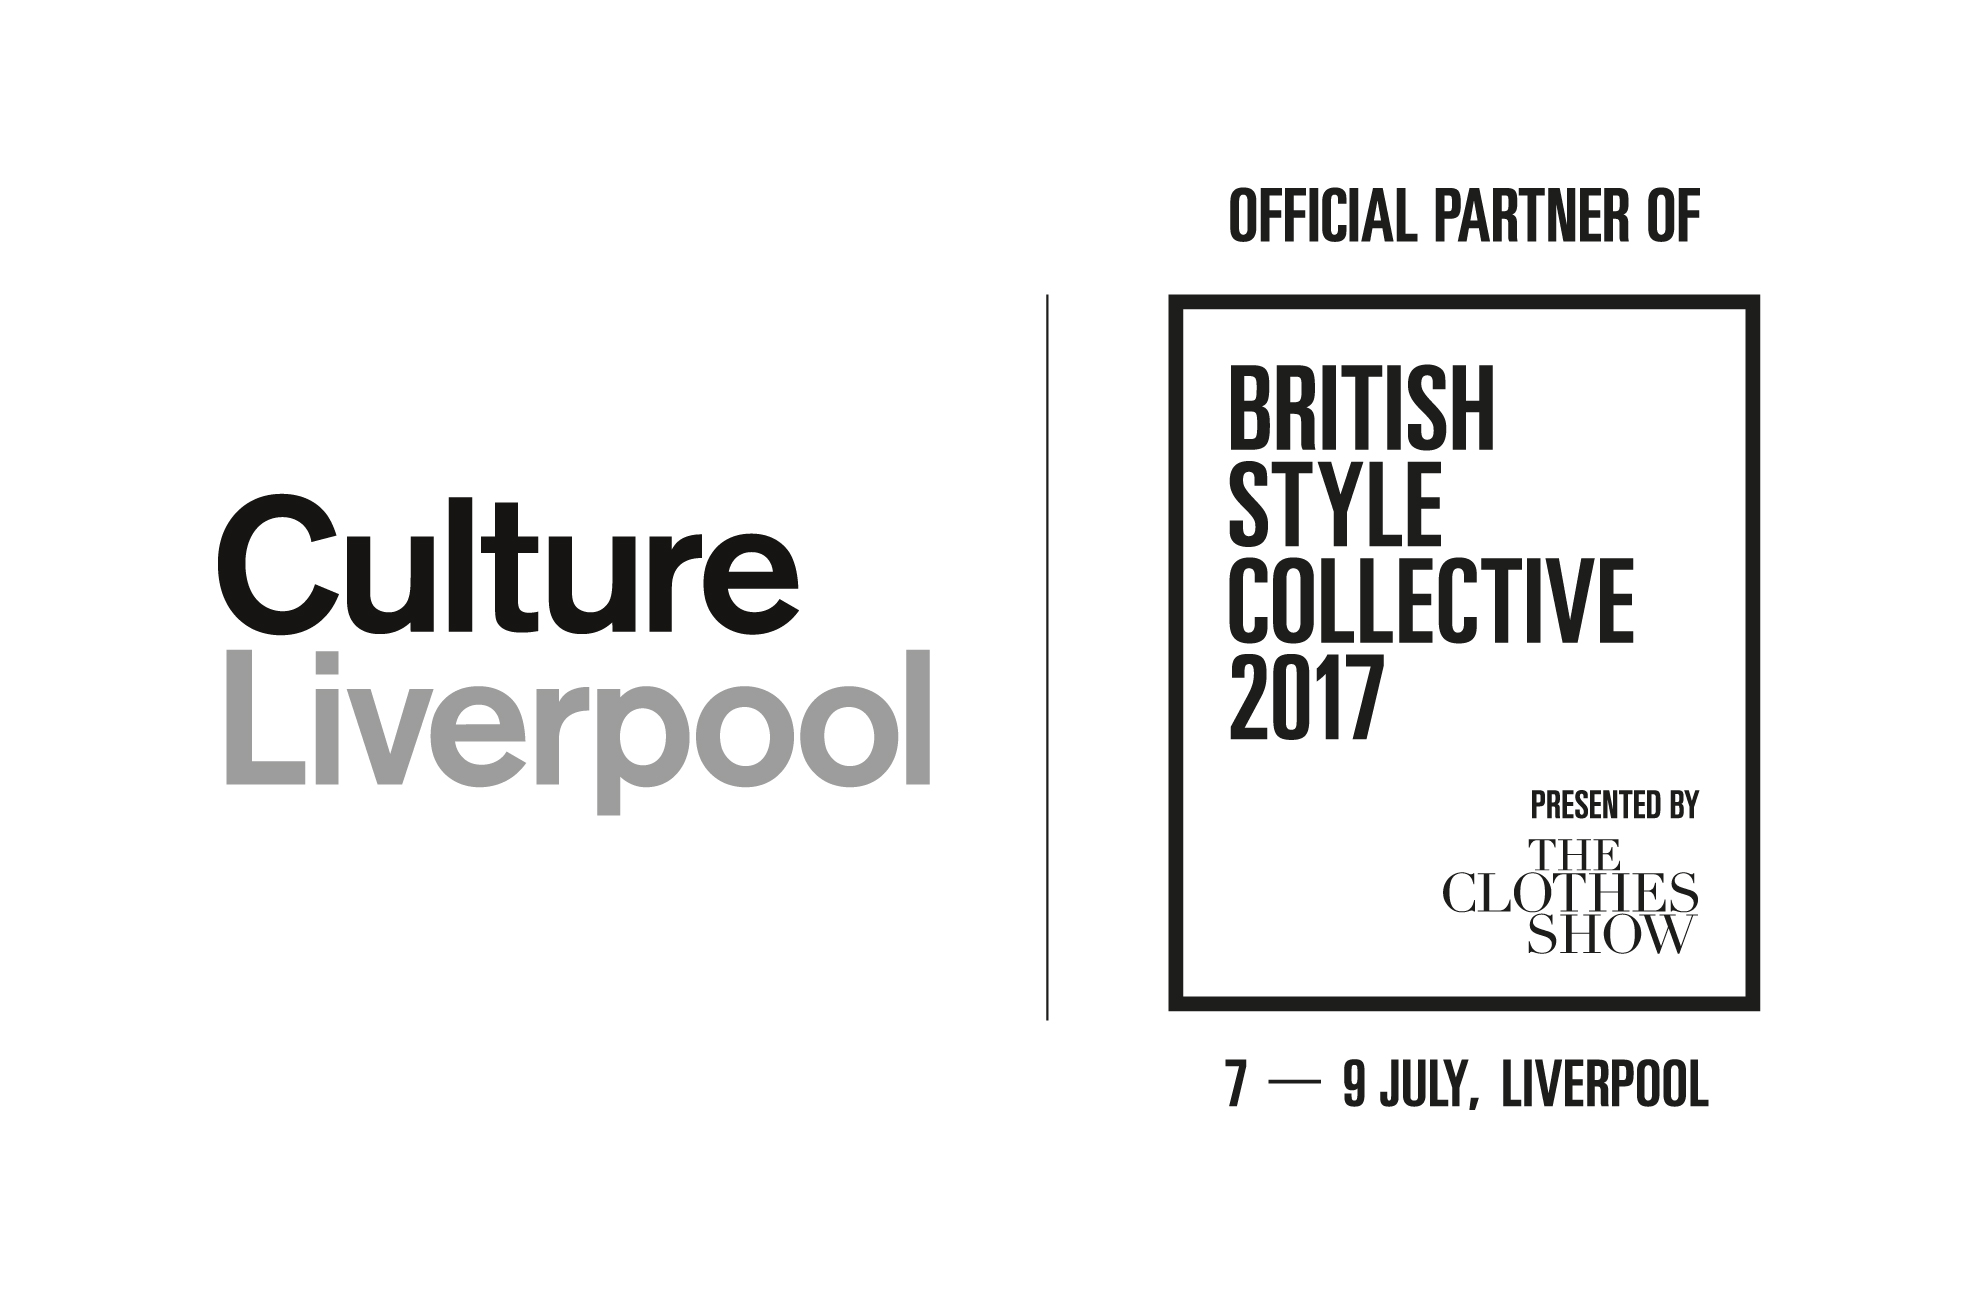 cultureliverpool_official-partner-logo